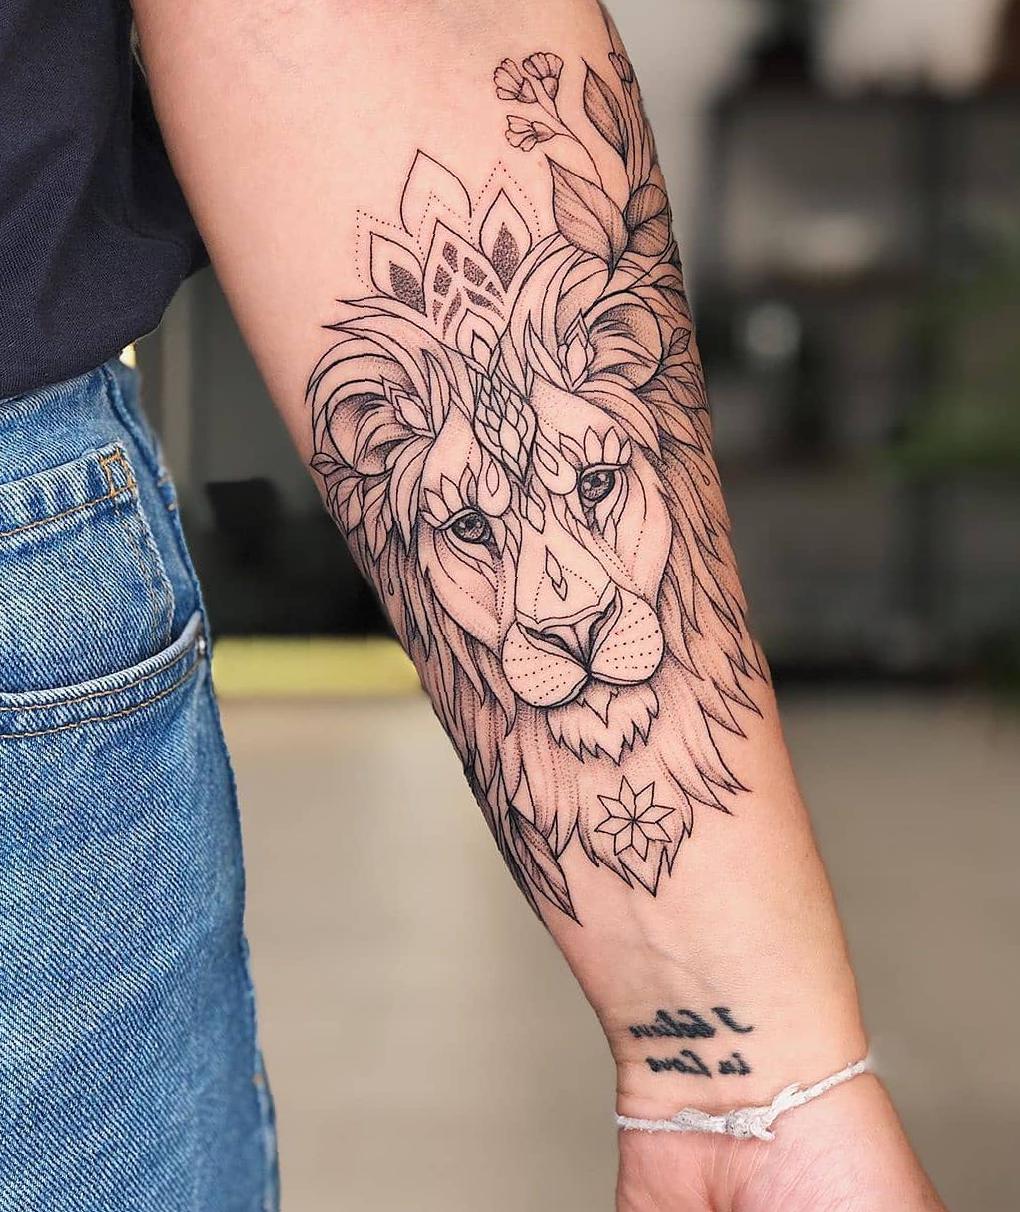 35 Inspiring Arm Tattoo Design Ideas for Women 2020 SooShell